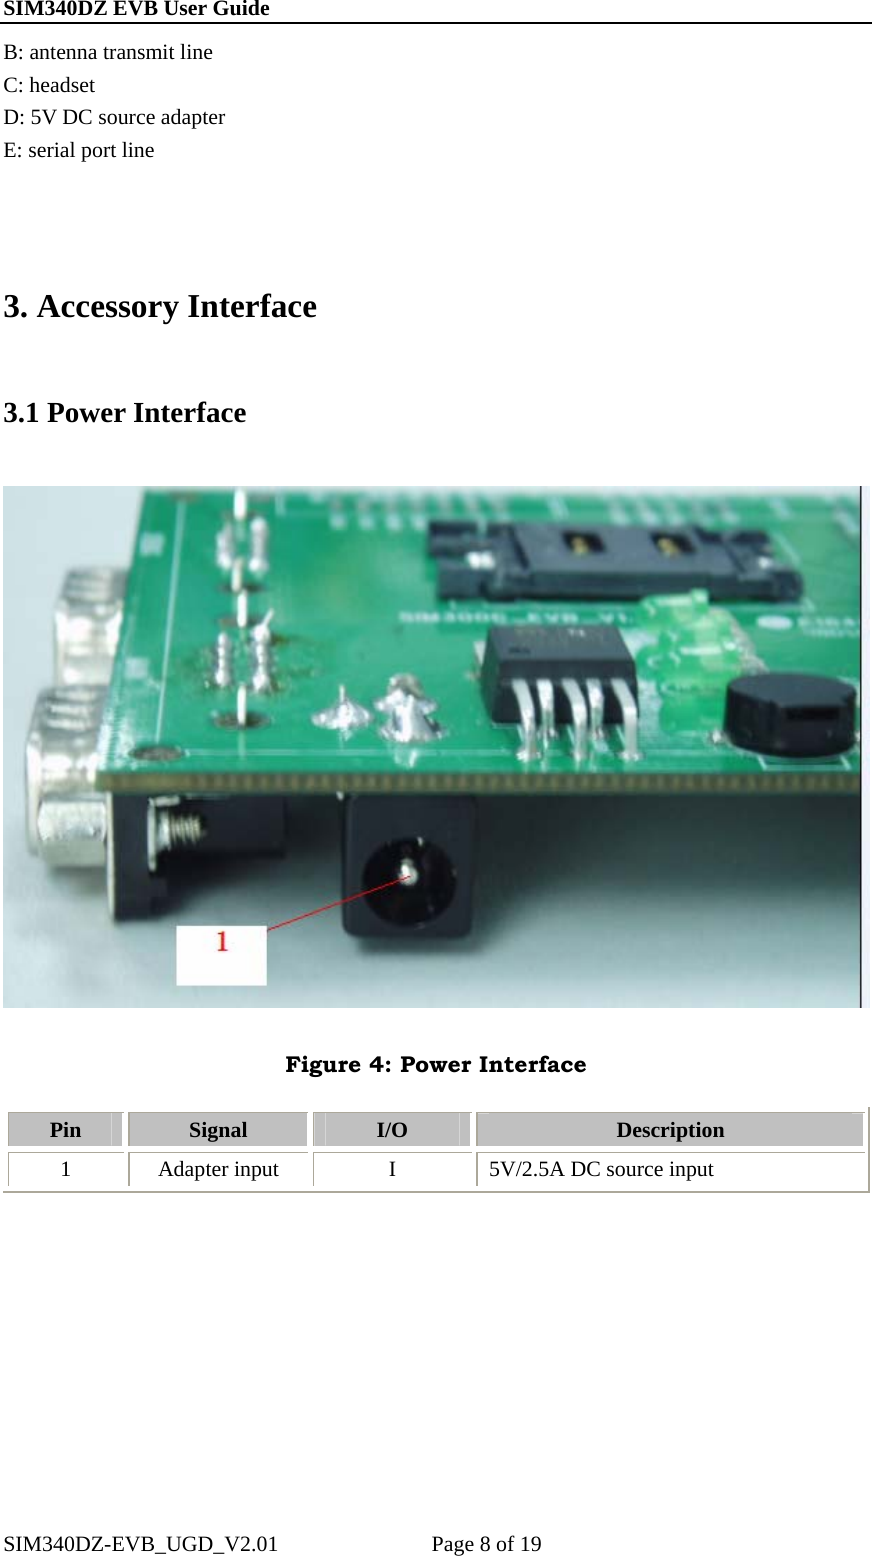 SIM340DZ EVB User Guide                                                       B: antenna transmit line C: headset D: 5V DC source adapter E: serial port line   3. Accessory Interface 3.1 Power Interface  Figure 4: Power Interface Pin  Signal  I/O  Description 1 Adapter input  I 5V/2.5A DC source input  SIM340DZ-EVB_UGD_V2.01              Page 8 of 19 